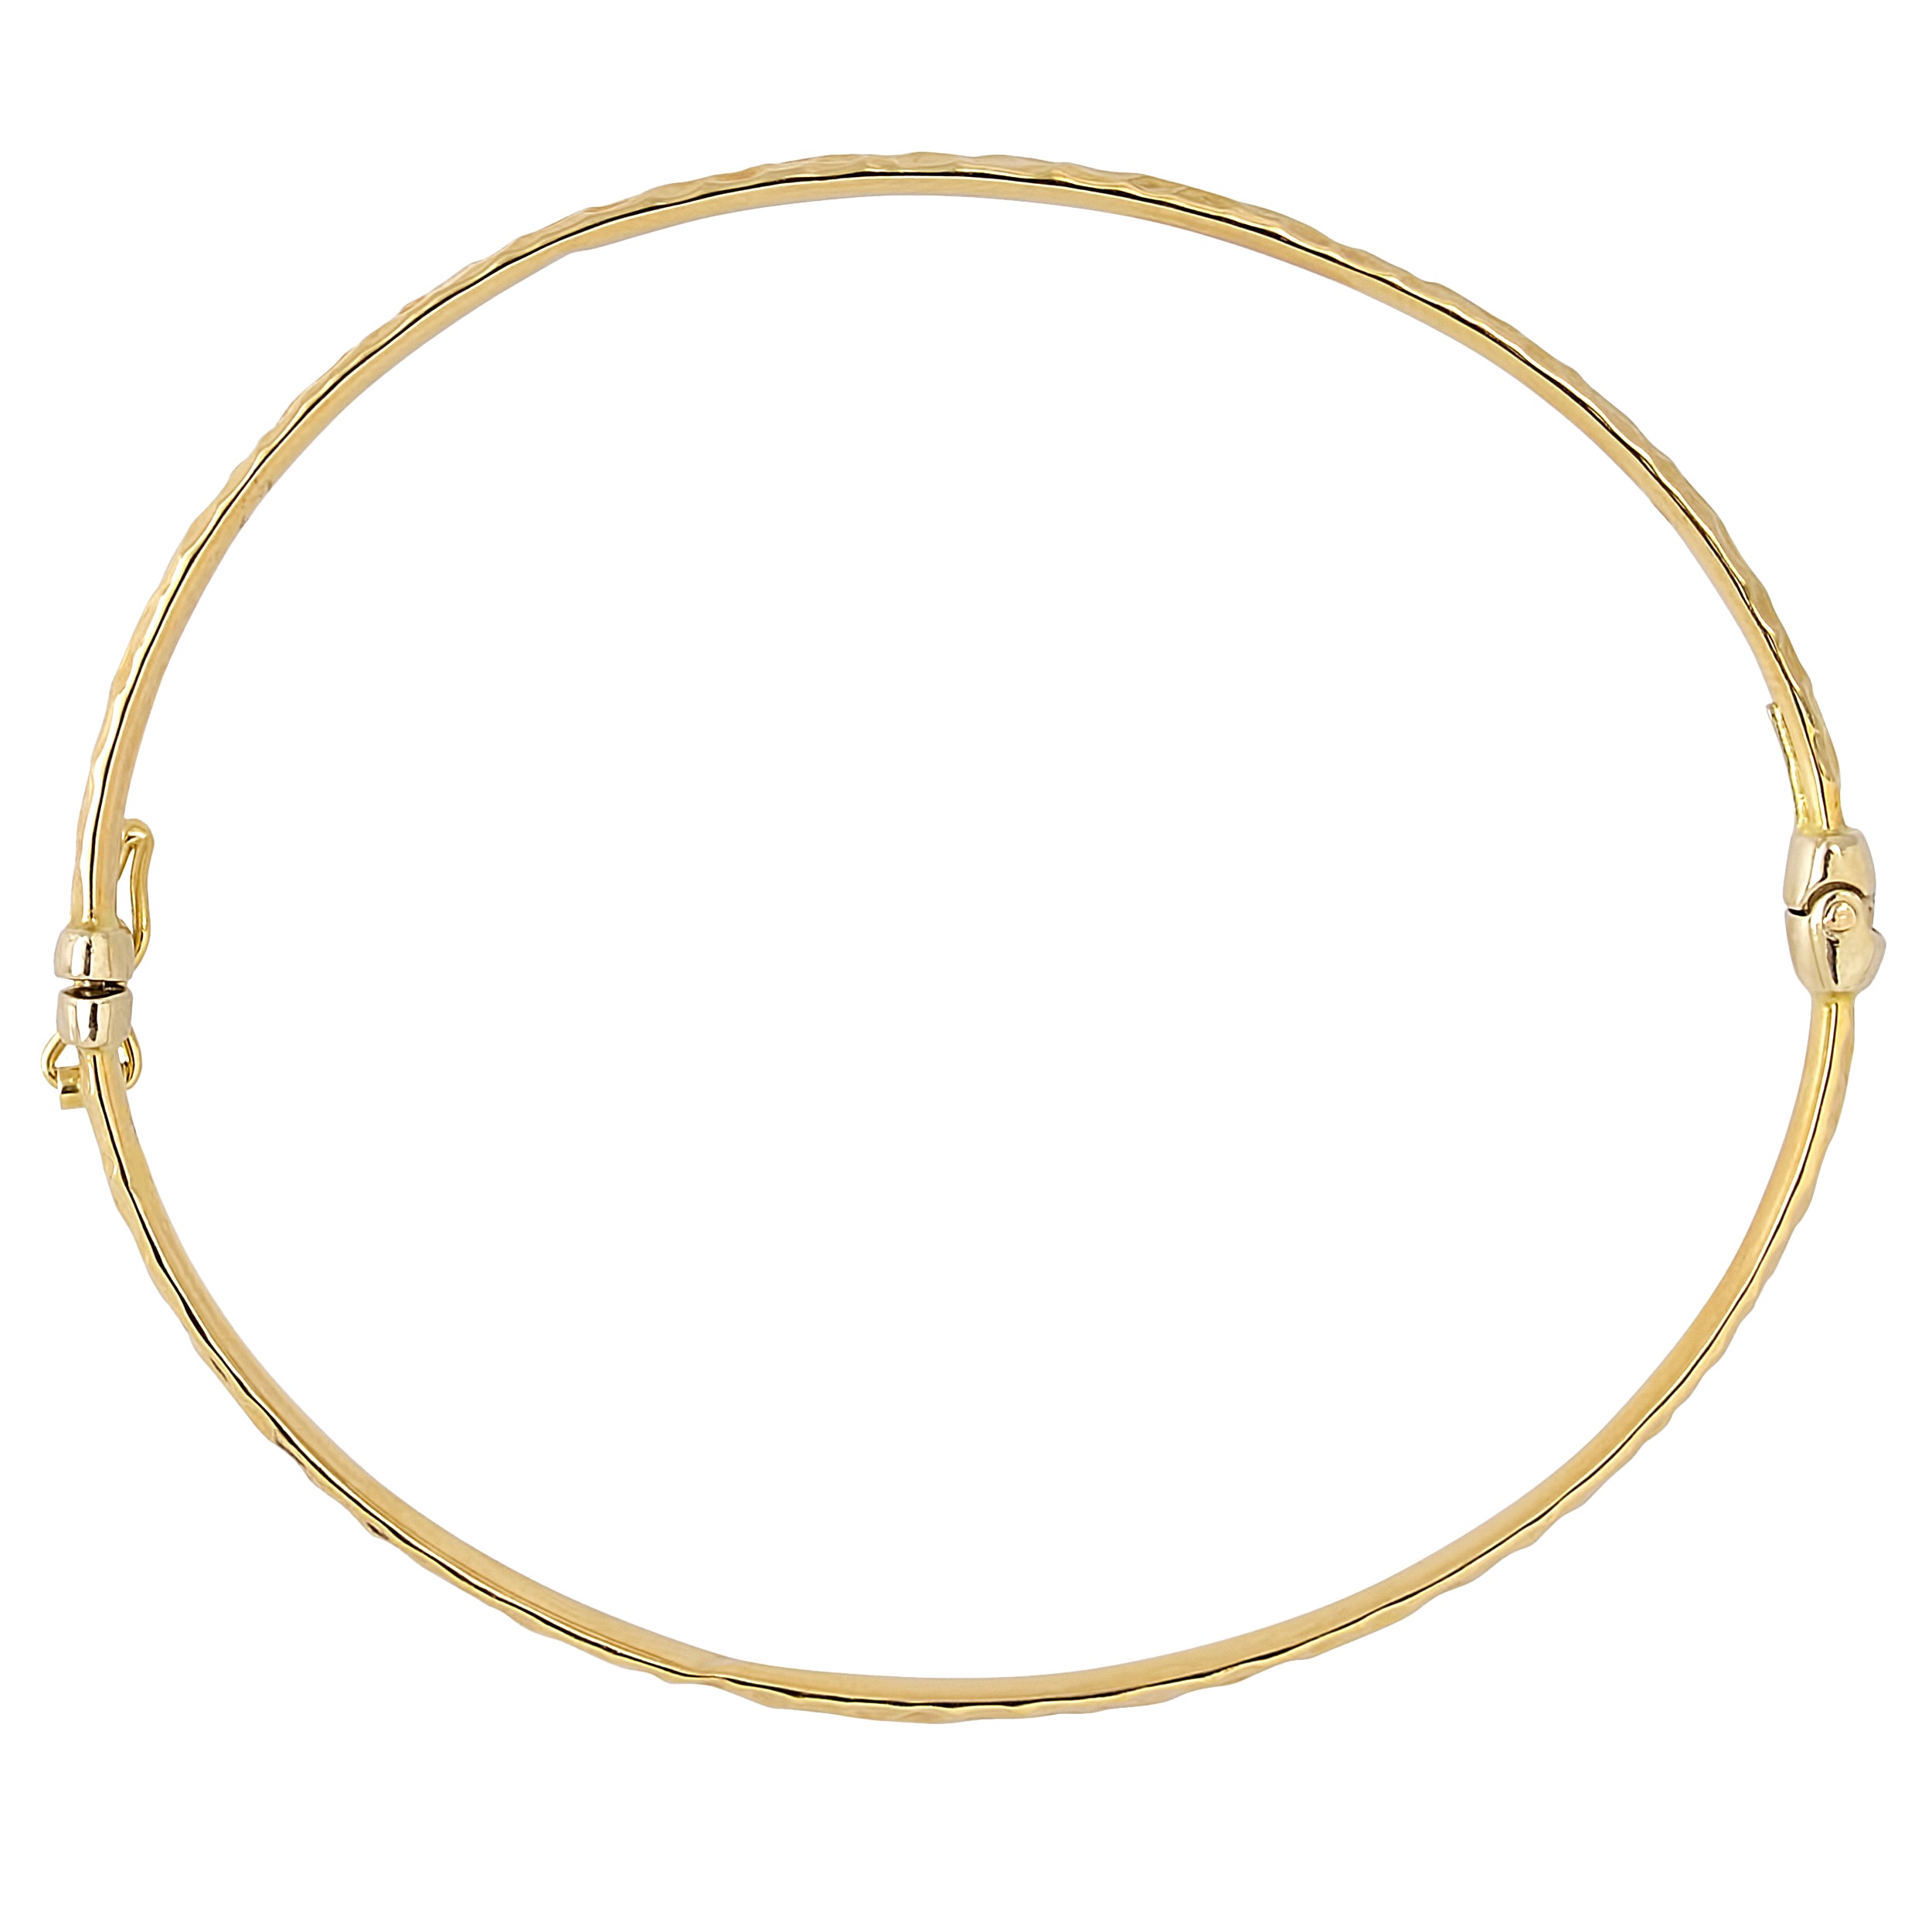 10k Yellow Gold Hammered Women's Bangle Bracelet, 7.5" fine designer jewelry for men and women